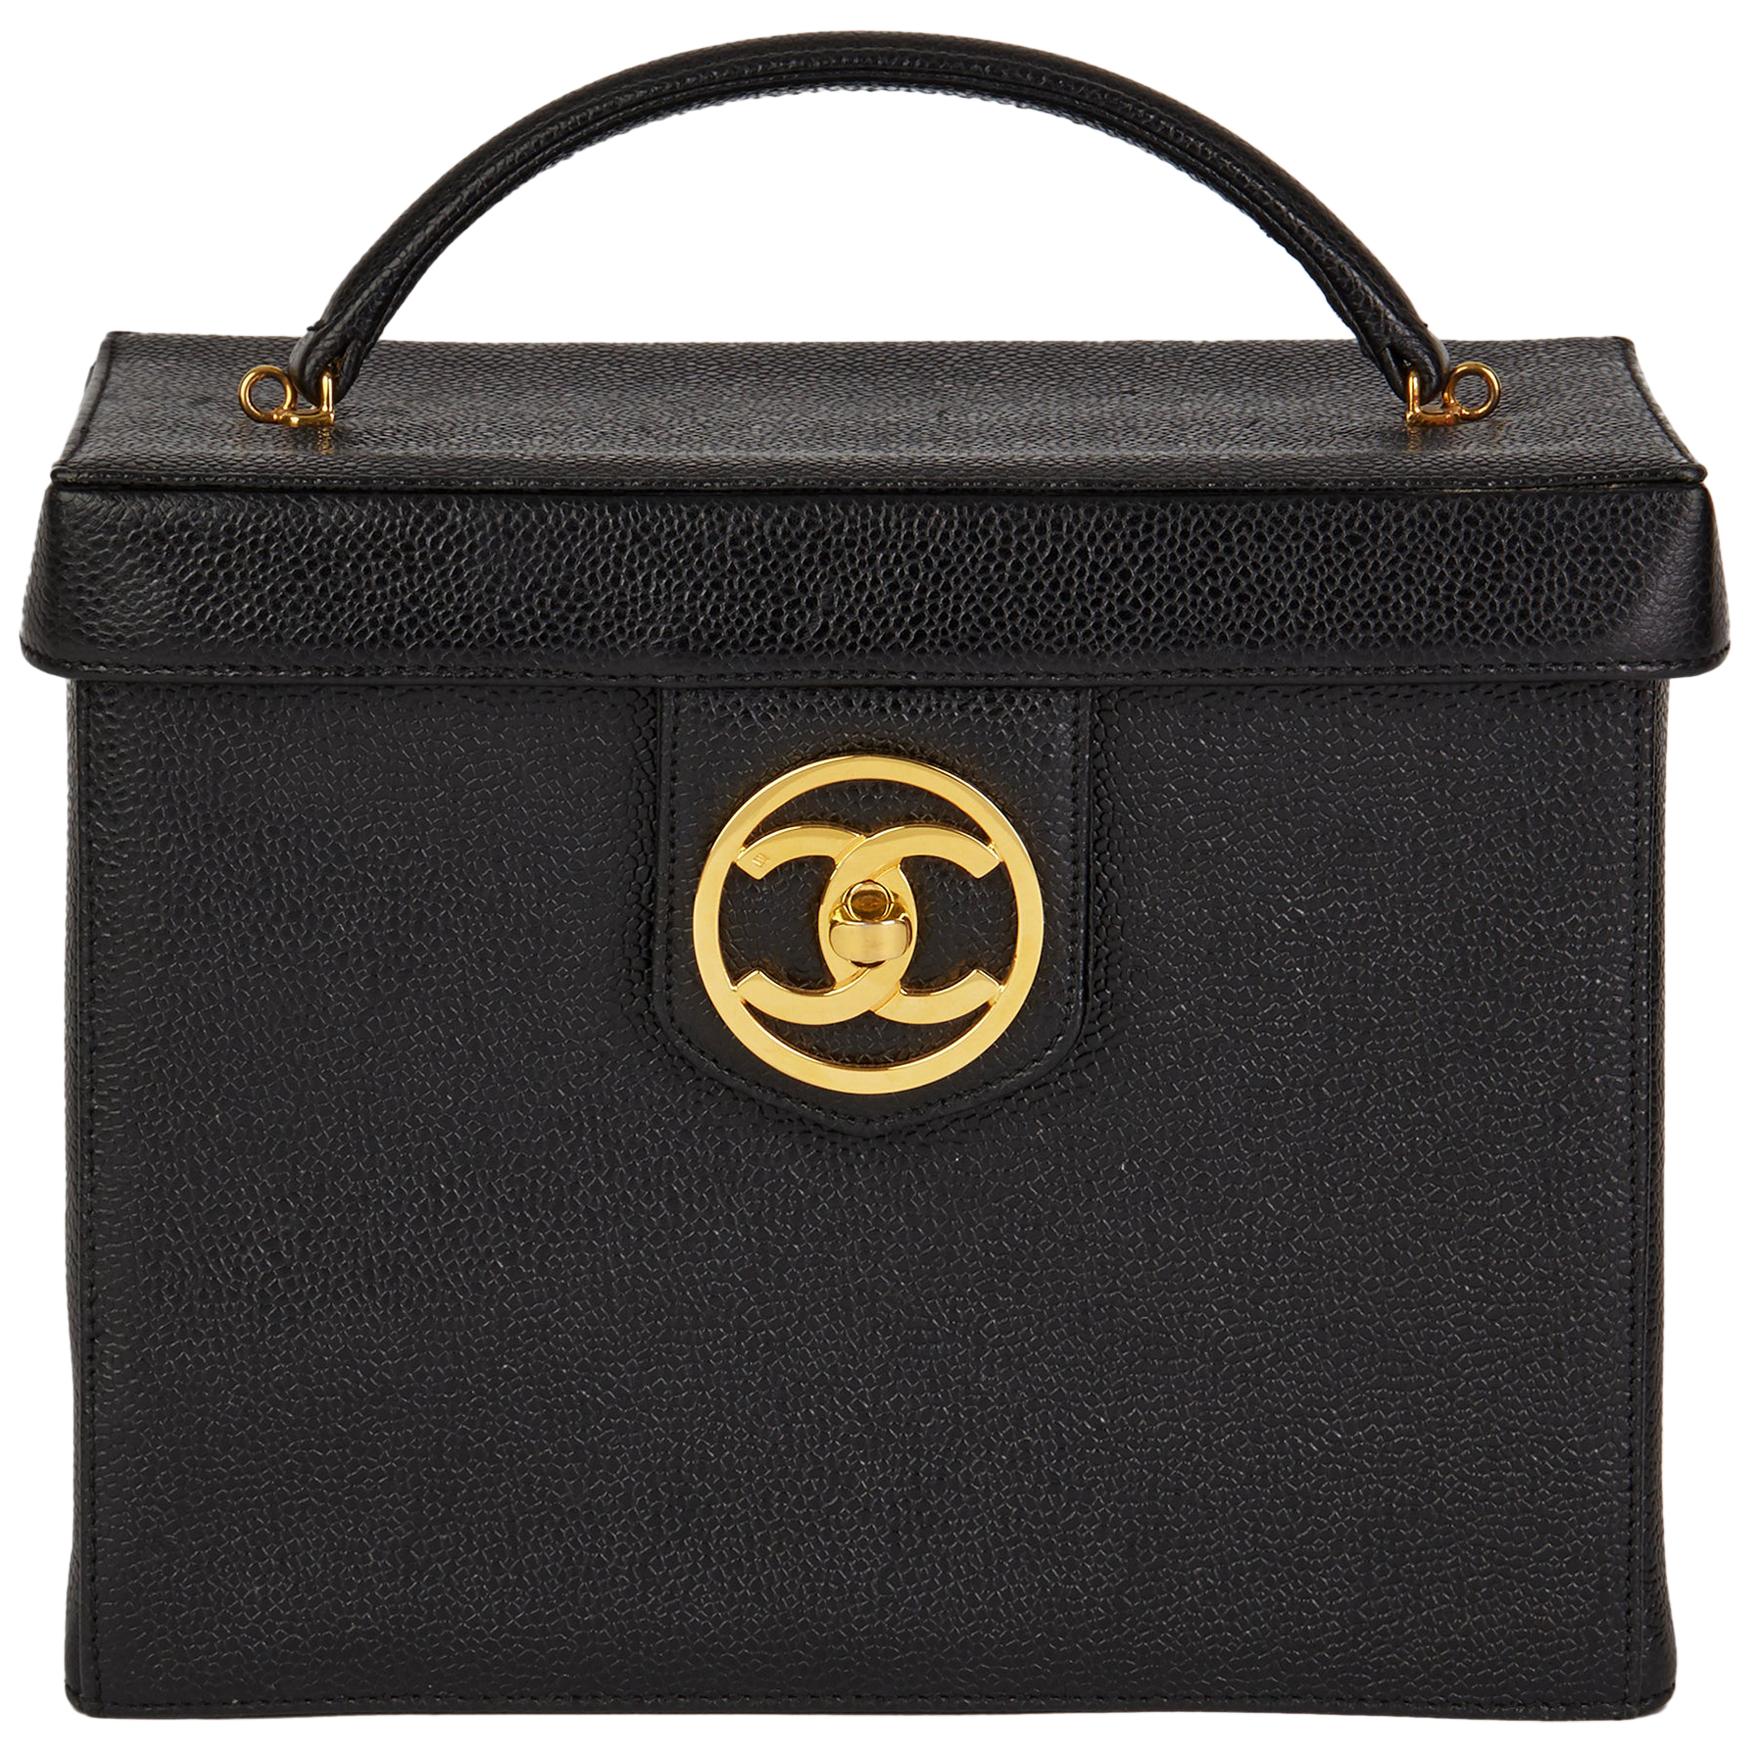 1996 Chanel Black Caviar Leather Vintage Classic Vanity Case